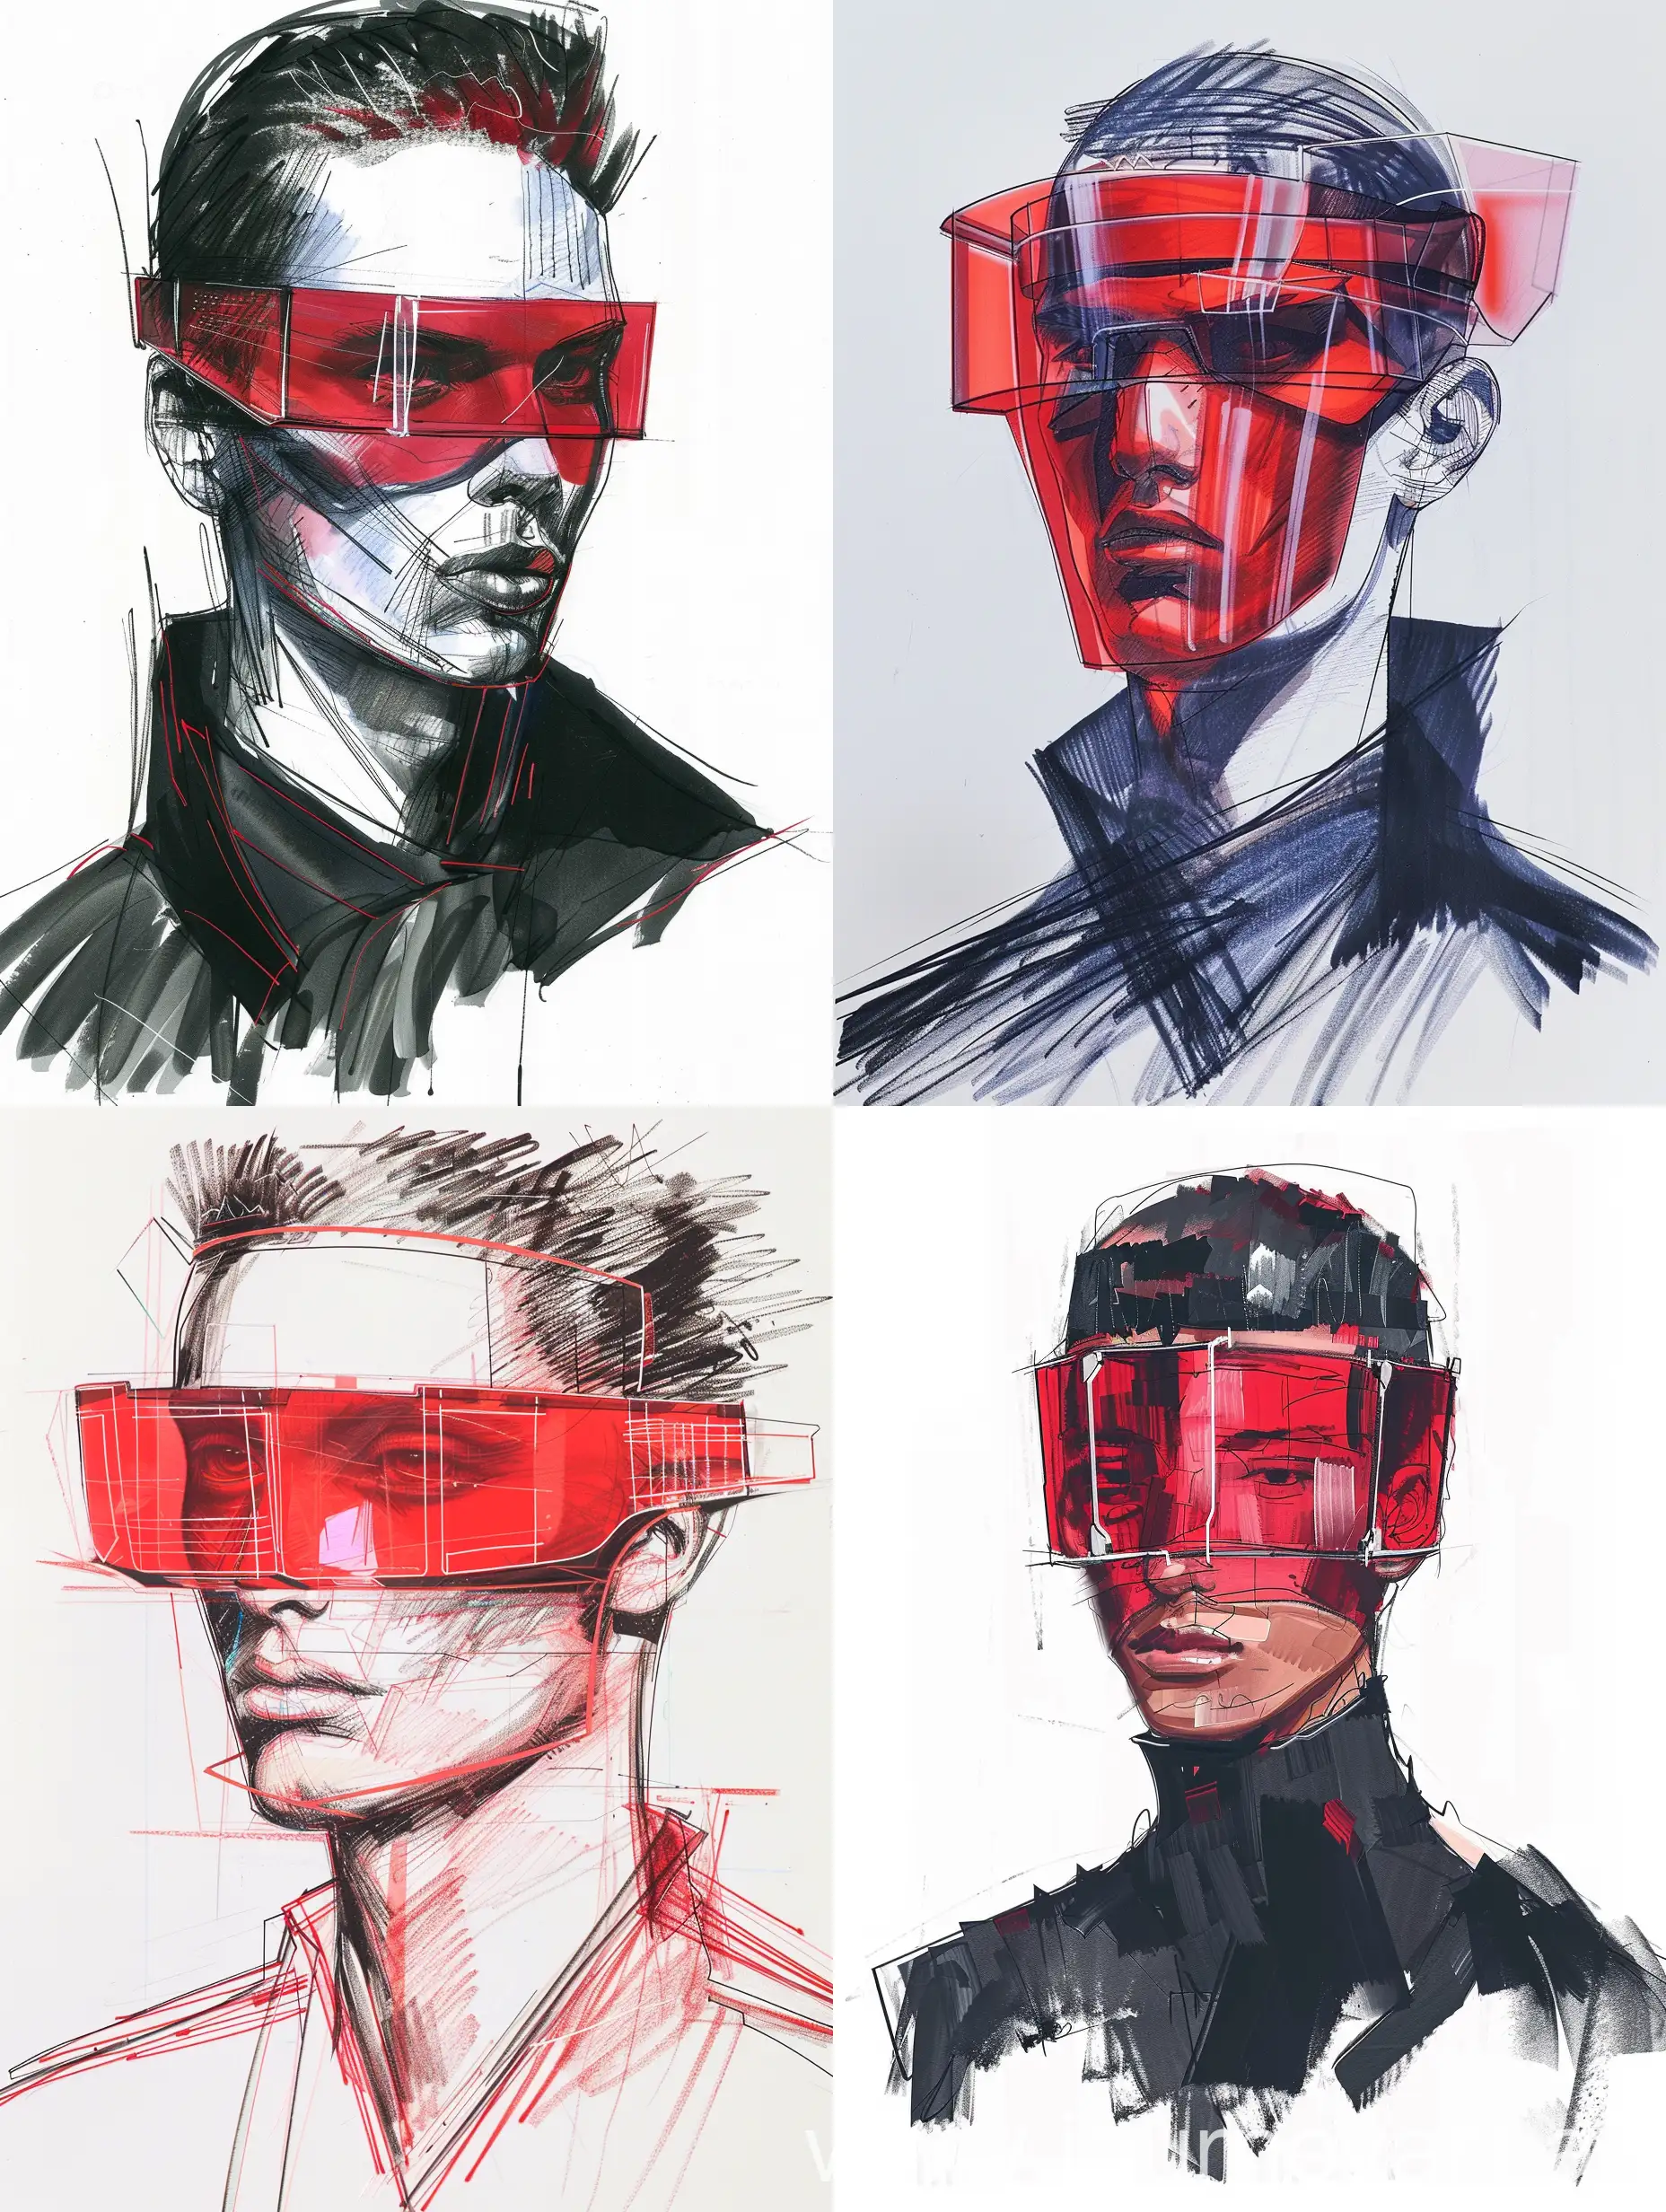 futuristic male high fashion, wear red transparent plastic face visor runway sketches minimalist illustration
